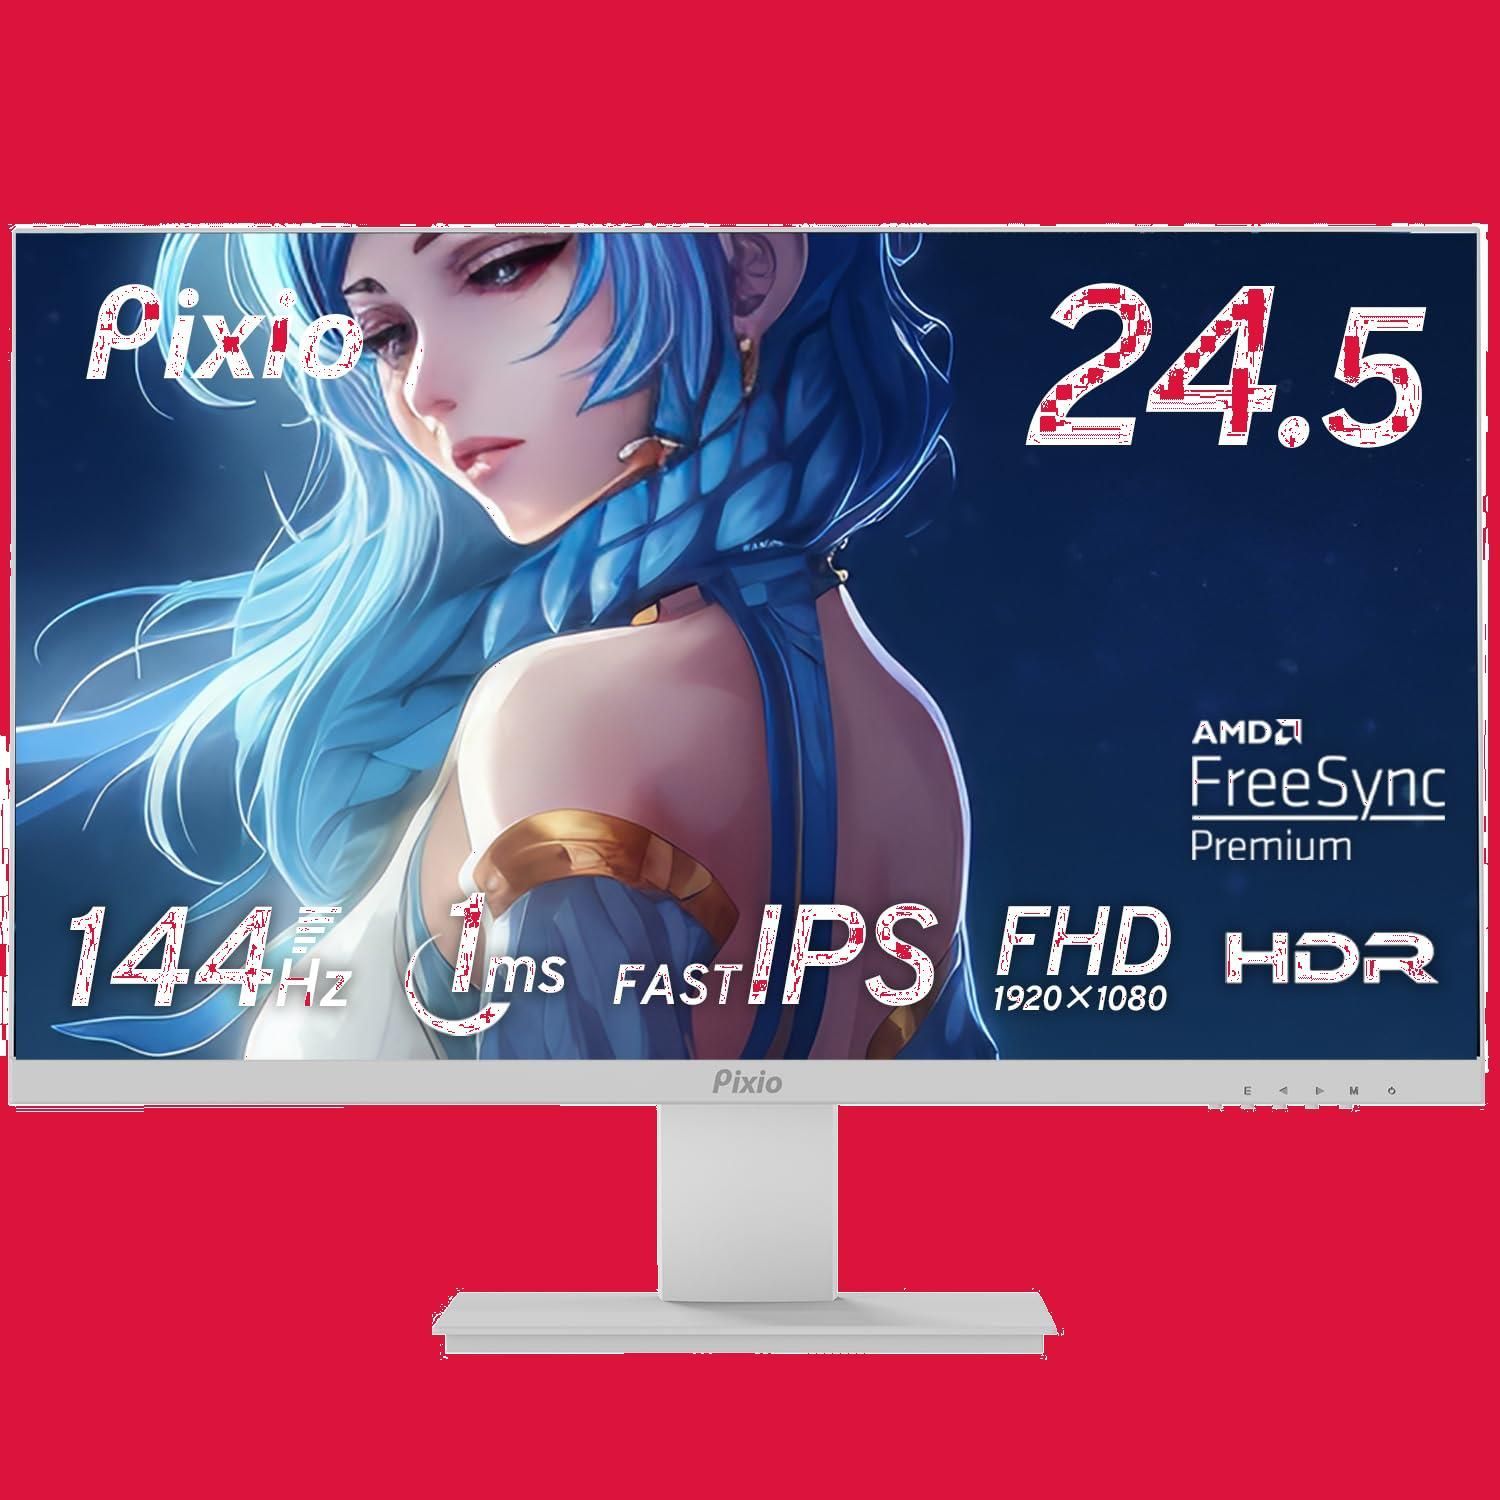 Pixio PX257 Prime White ゲーミングモニター 24.5インチ 144Hz FHD